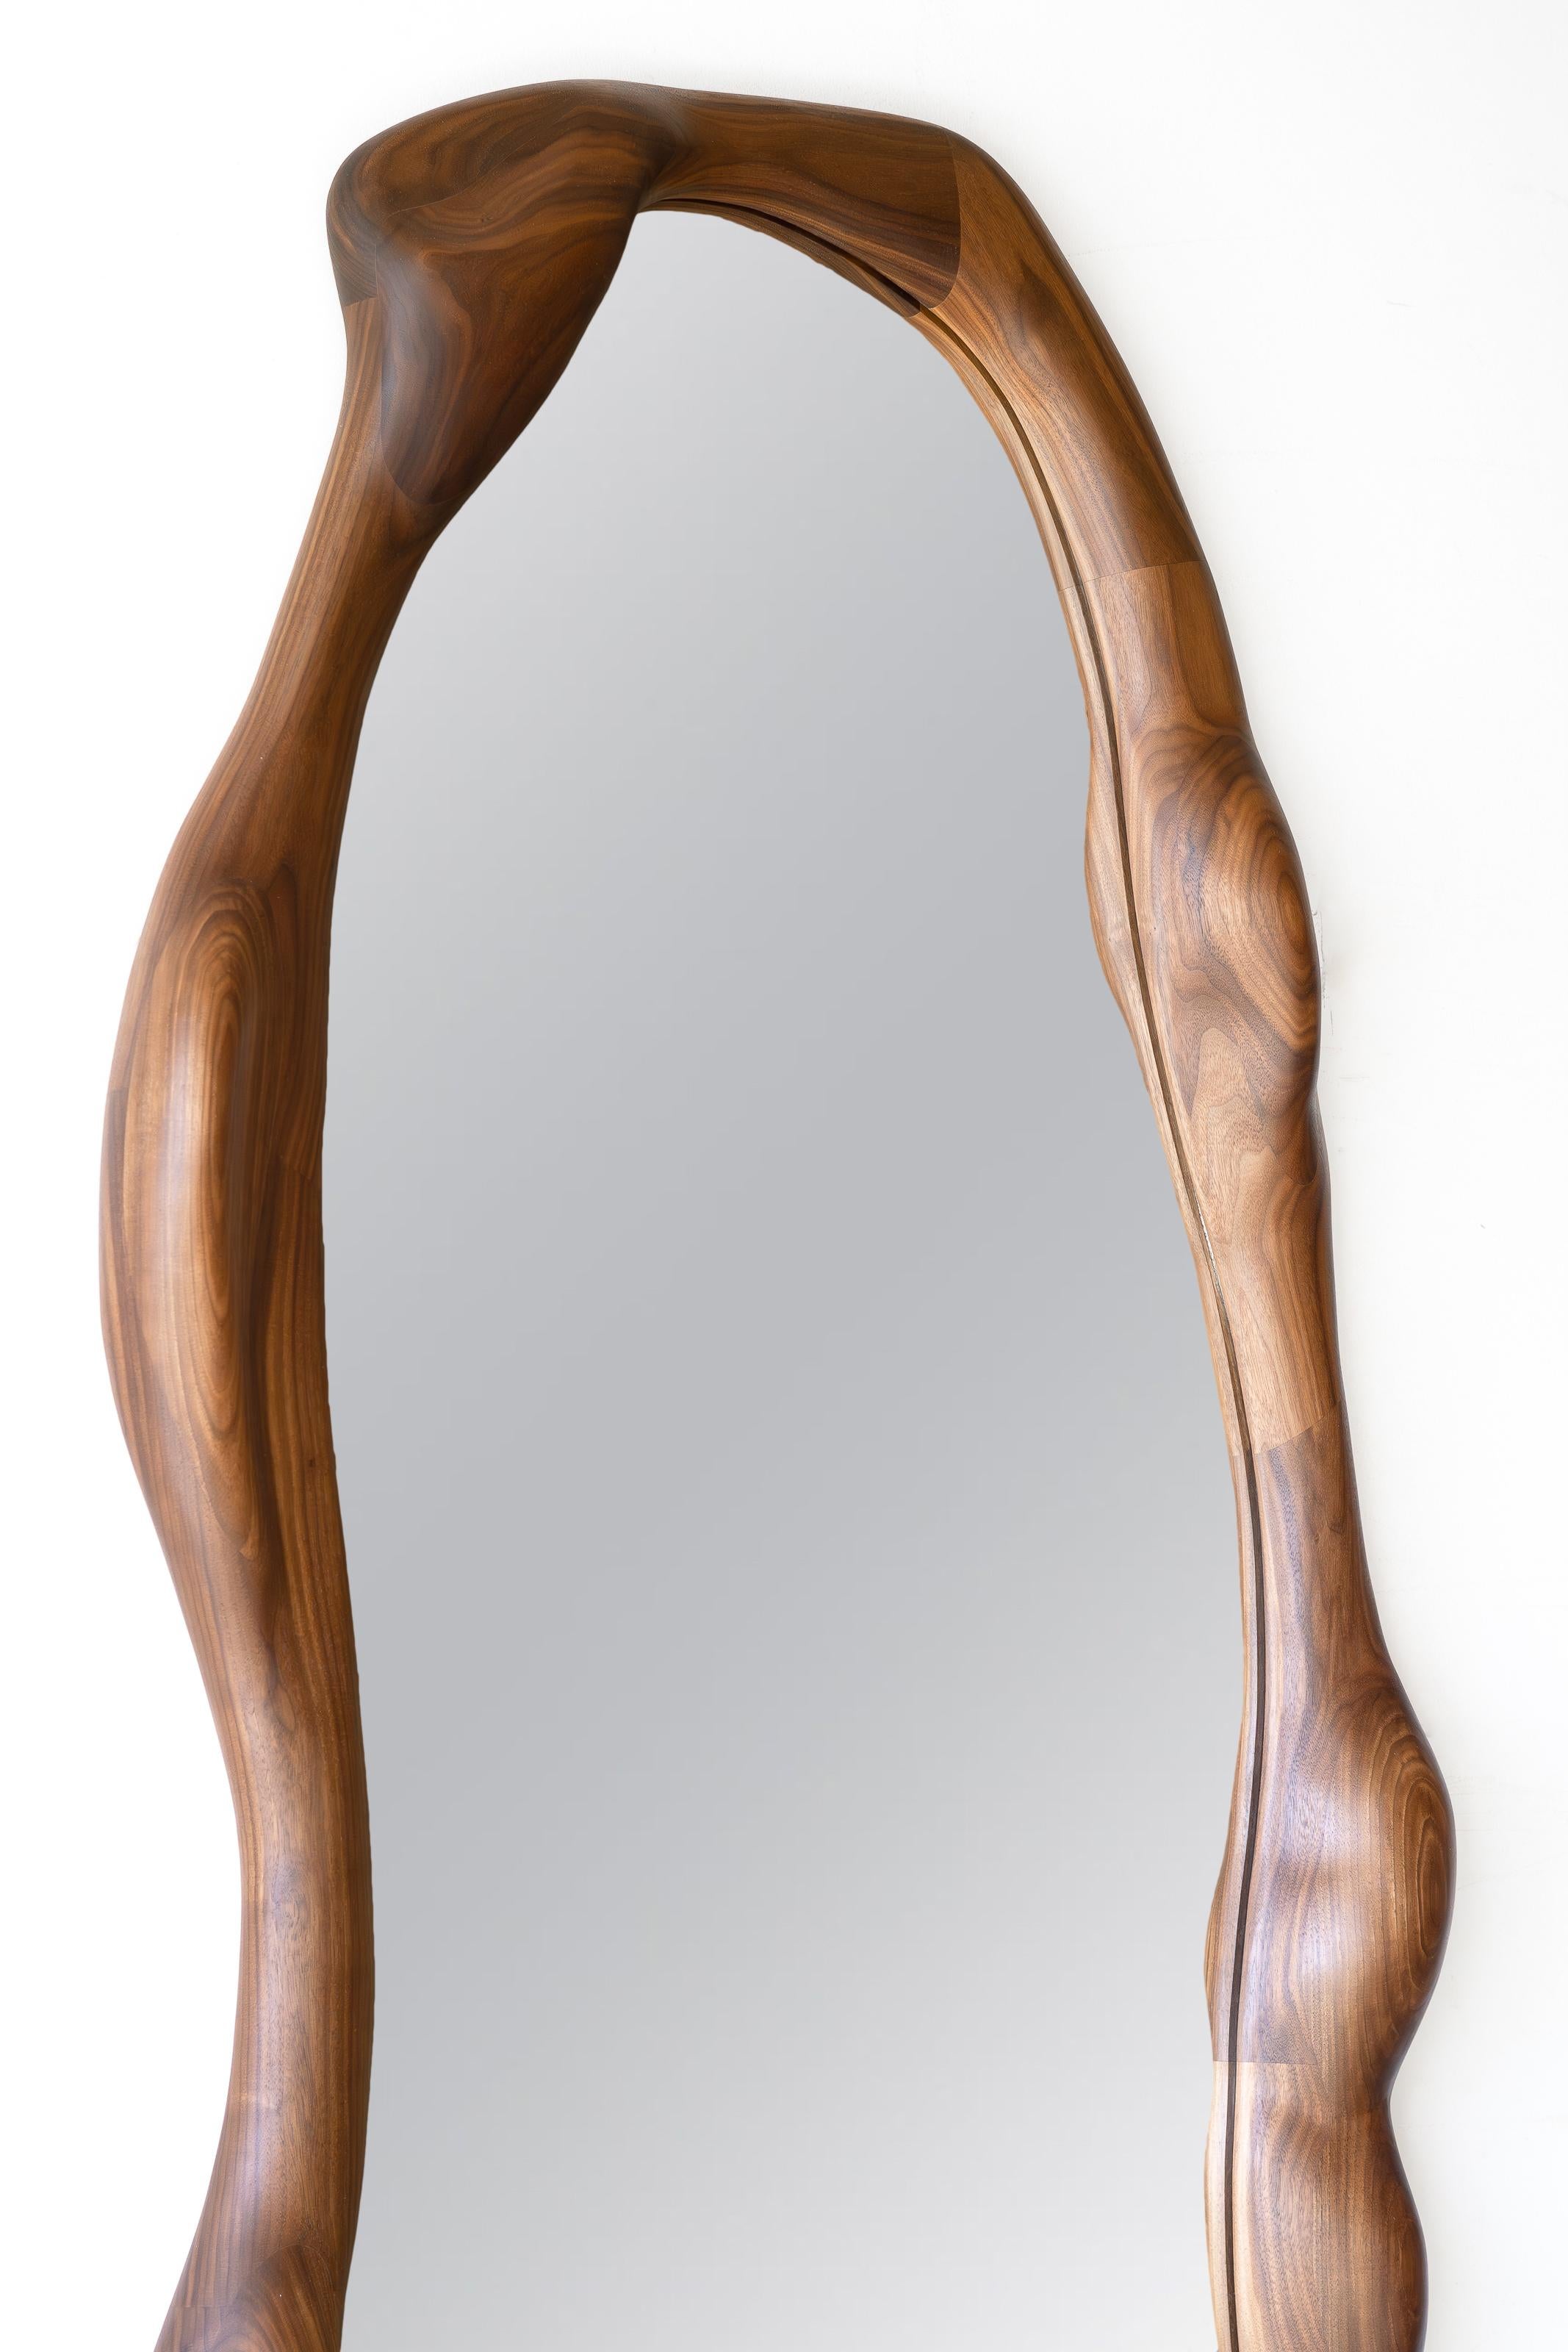 Organic Modern Big Sculptural Mirror in Walnut Wood For Sale